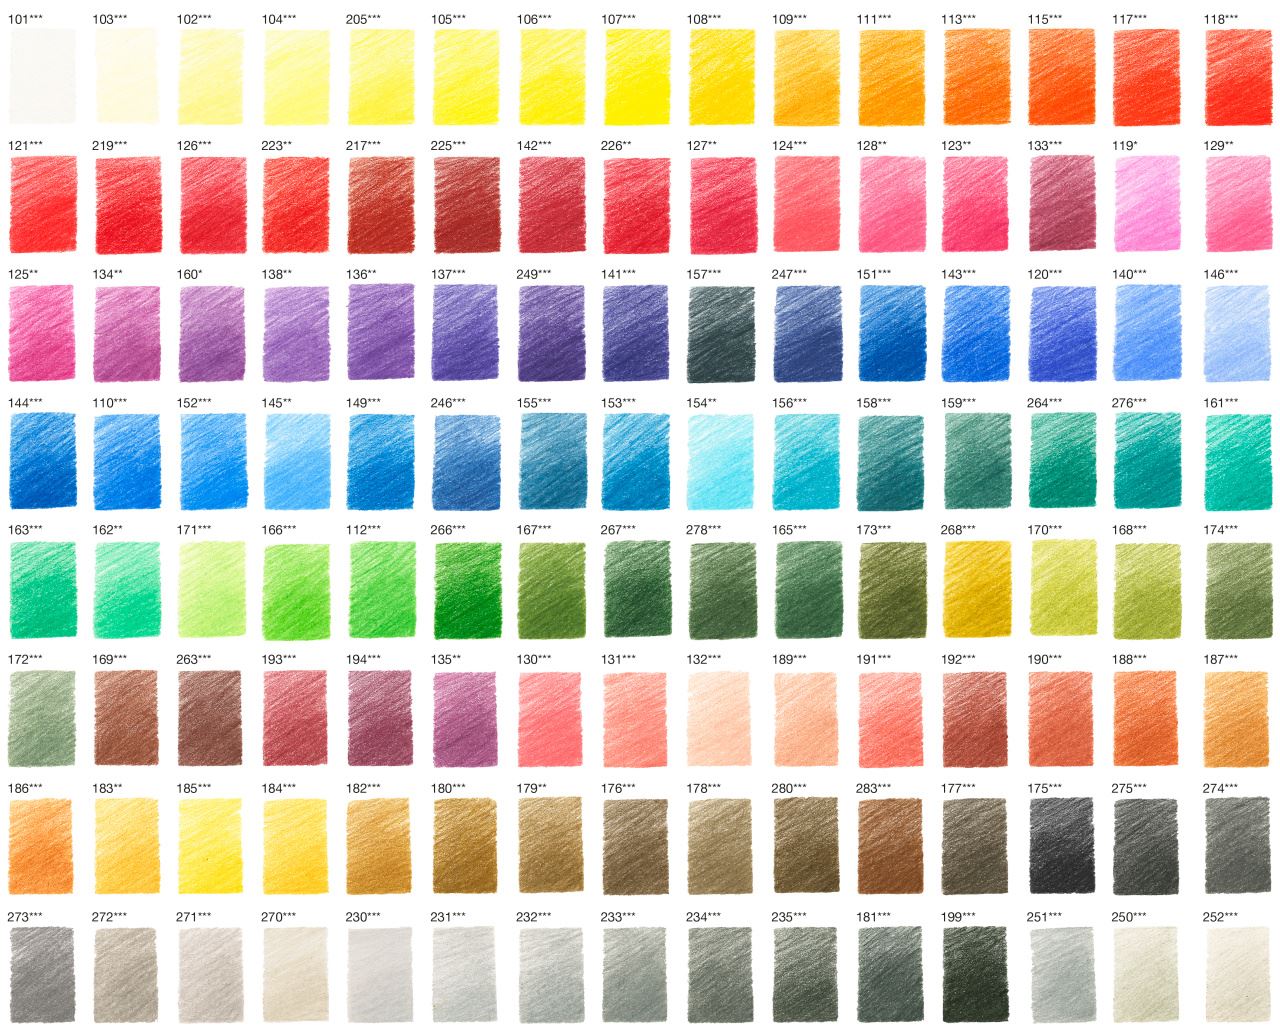 Faber-Castell - Estuche de metal con 120 lápices de color Polychromos